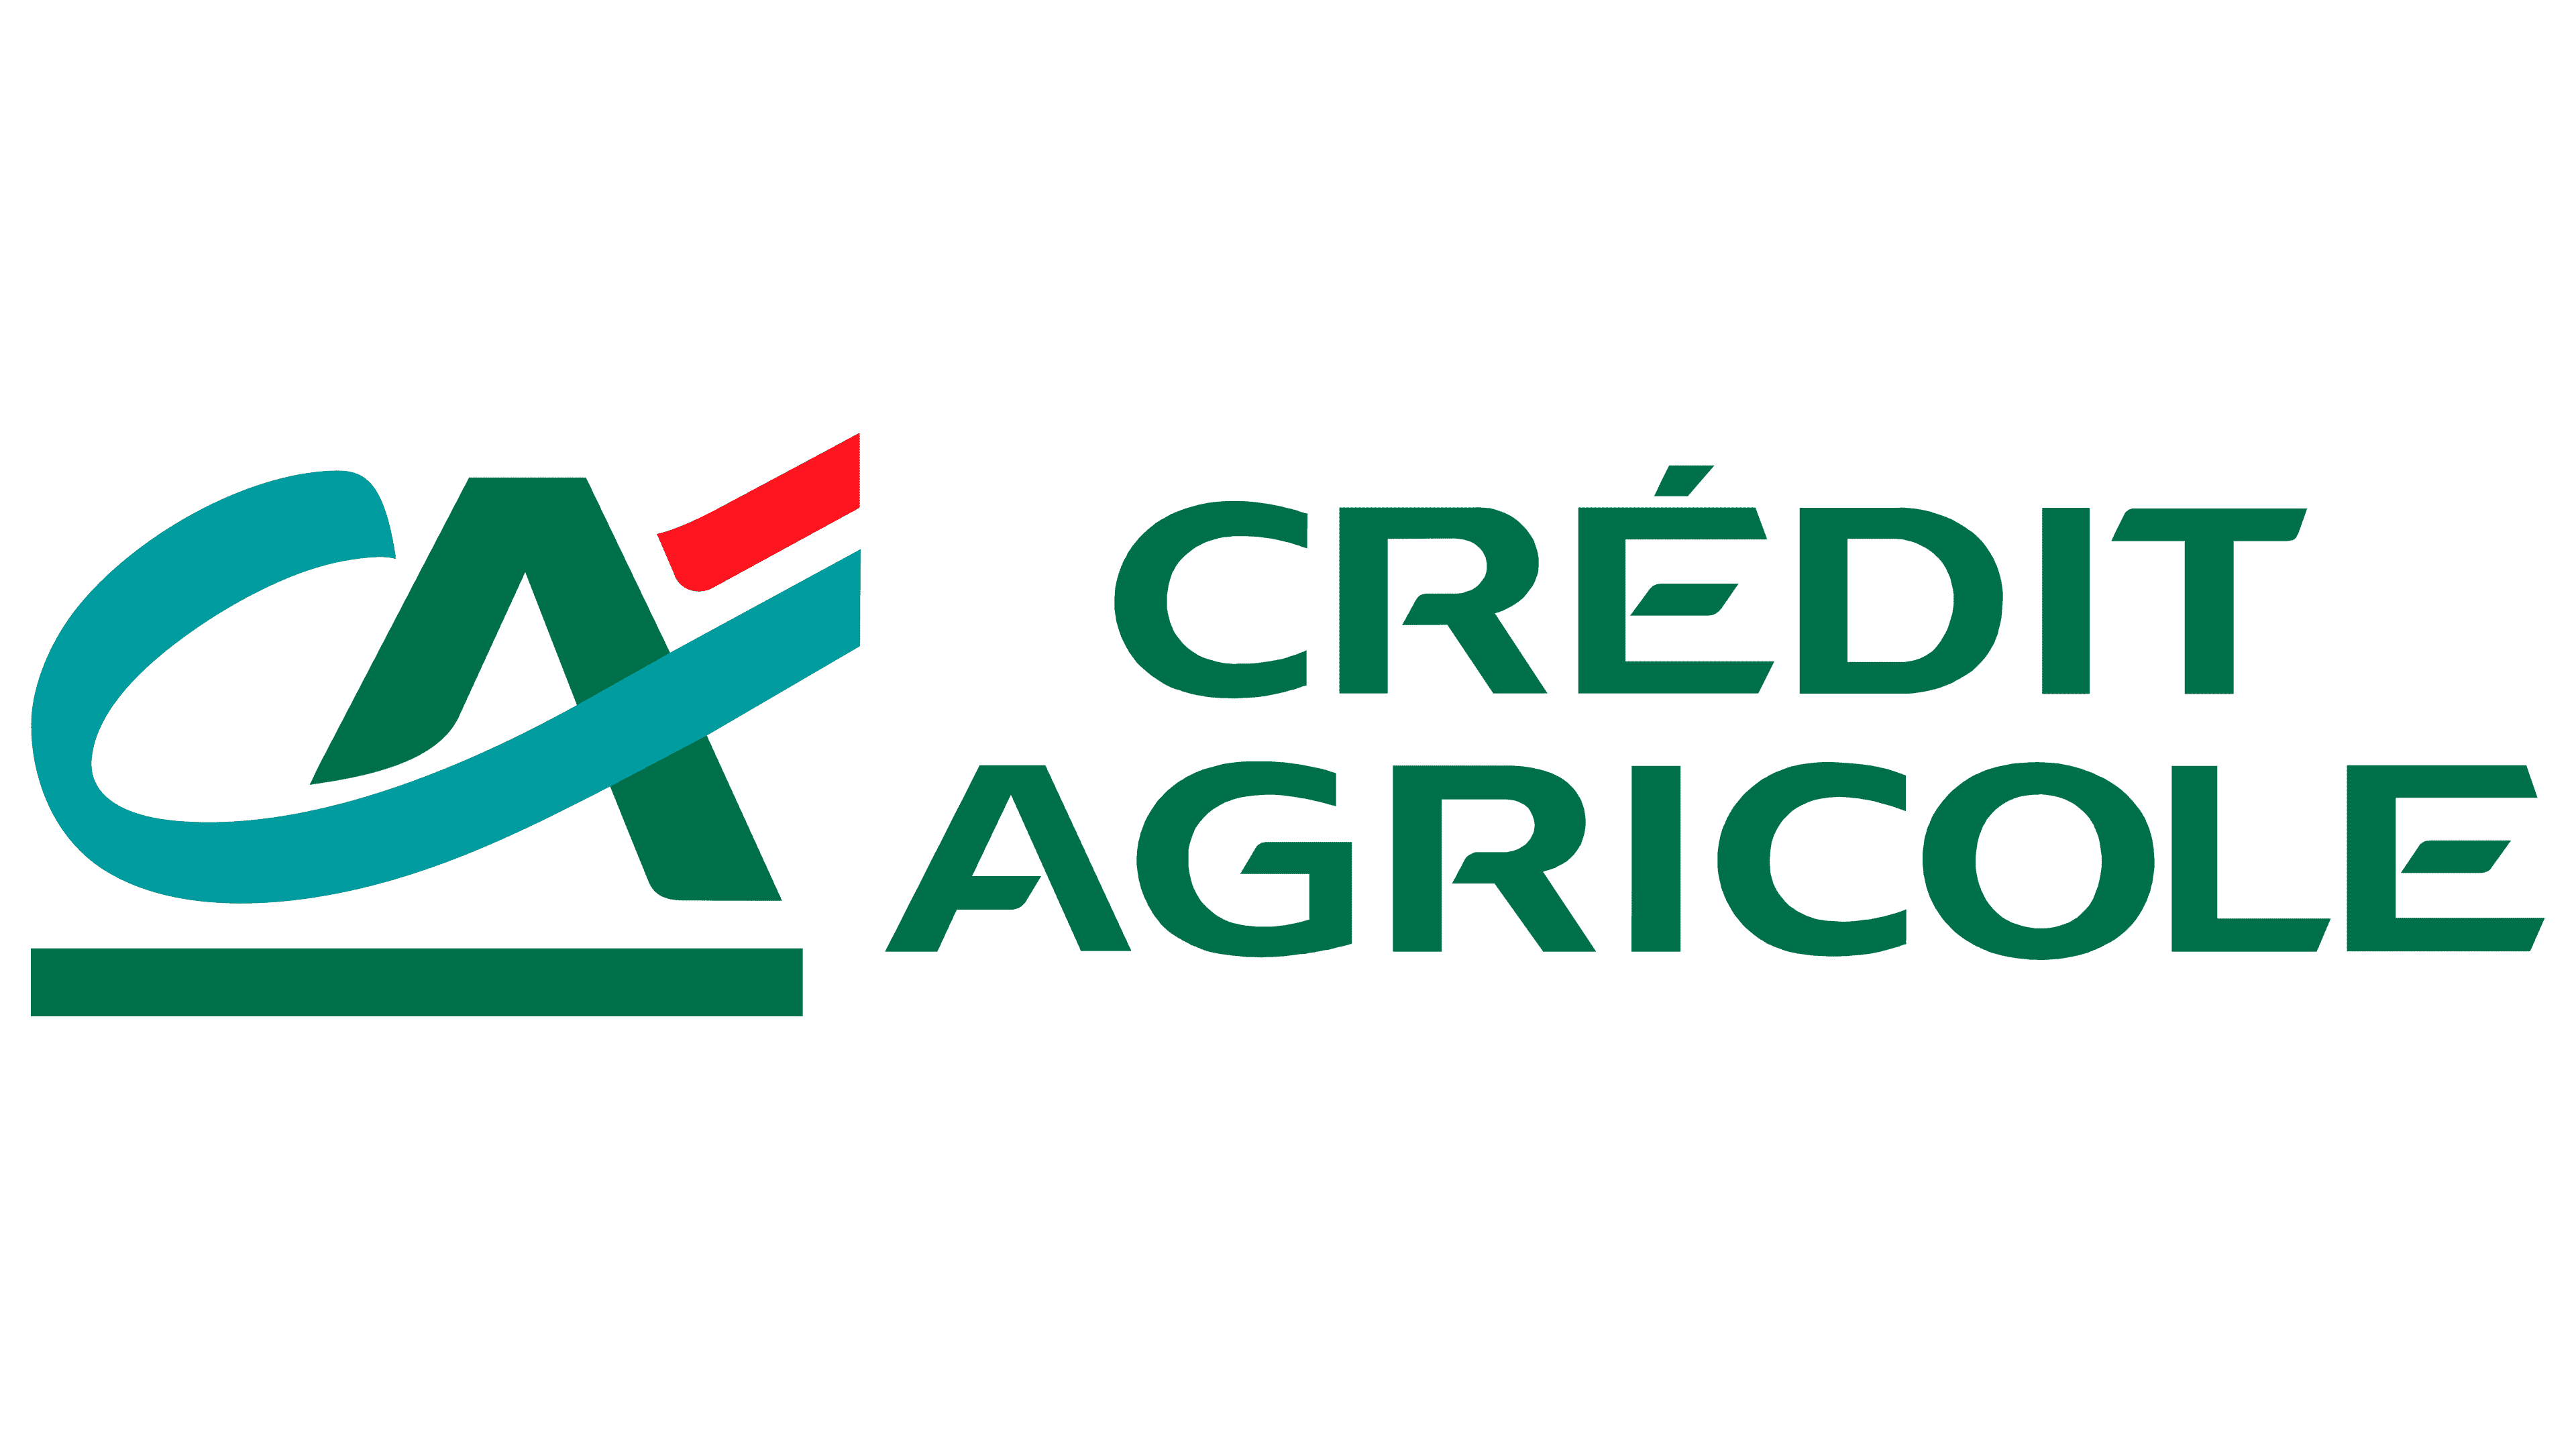 Credit-Agricole-Logo